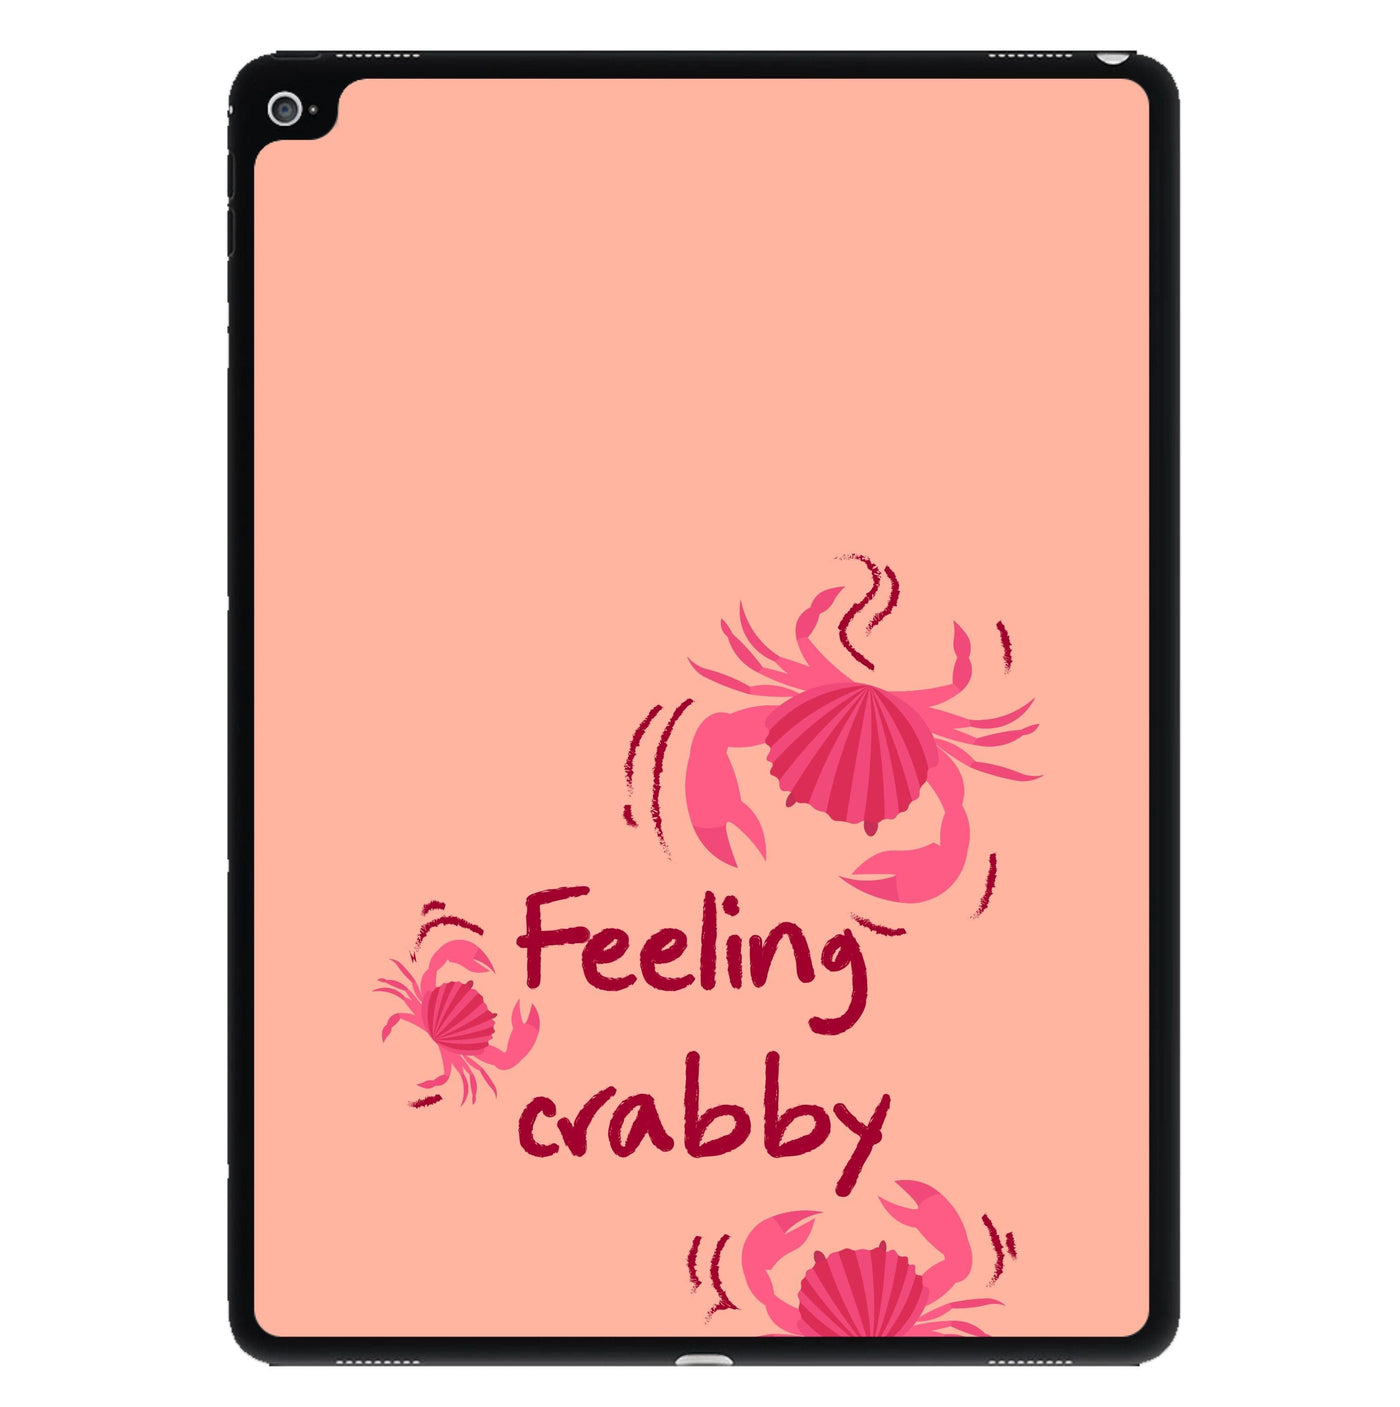 Feeling Crabby - Sealife iPad Case